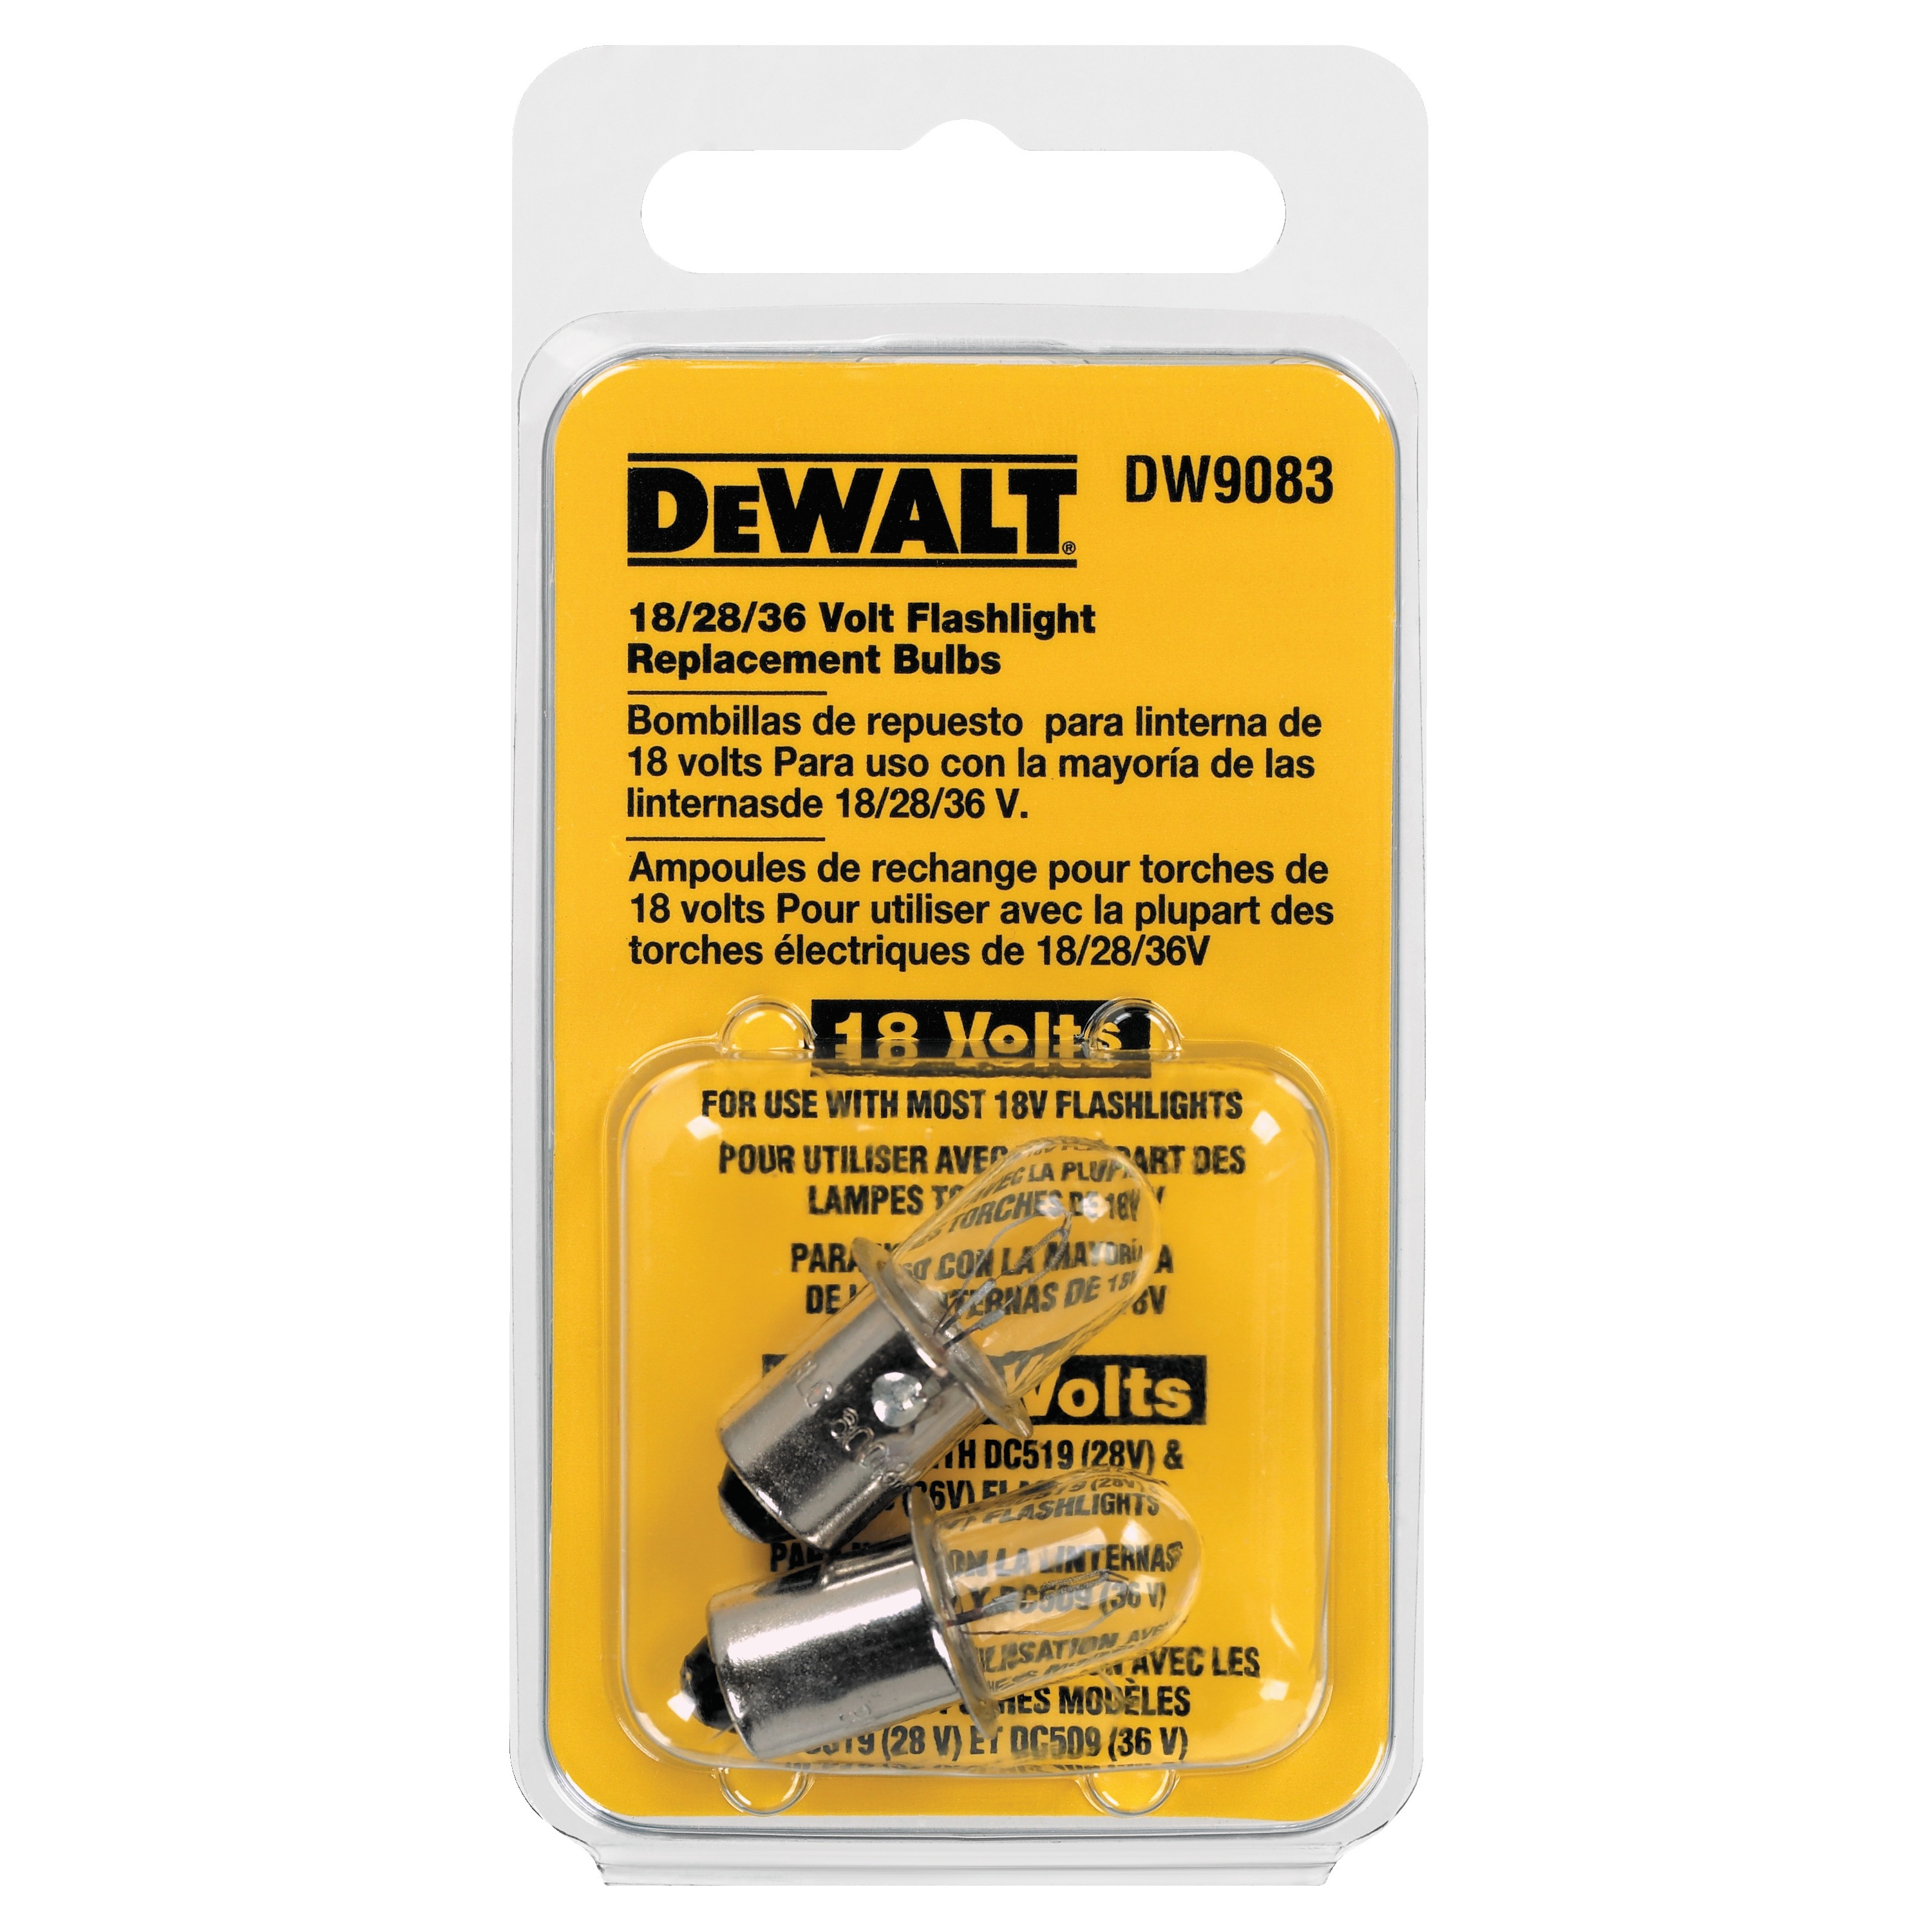 DEWALT 18V Pivoting Head Flashlight DW908 for sale online 